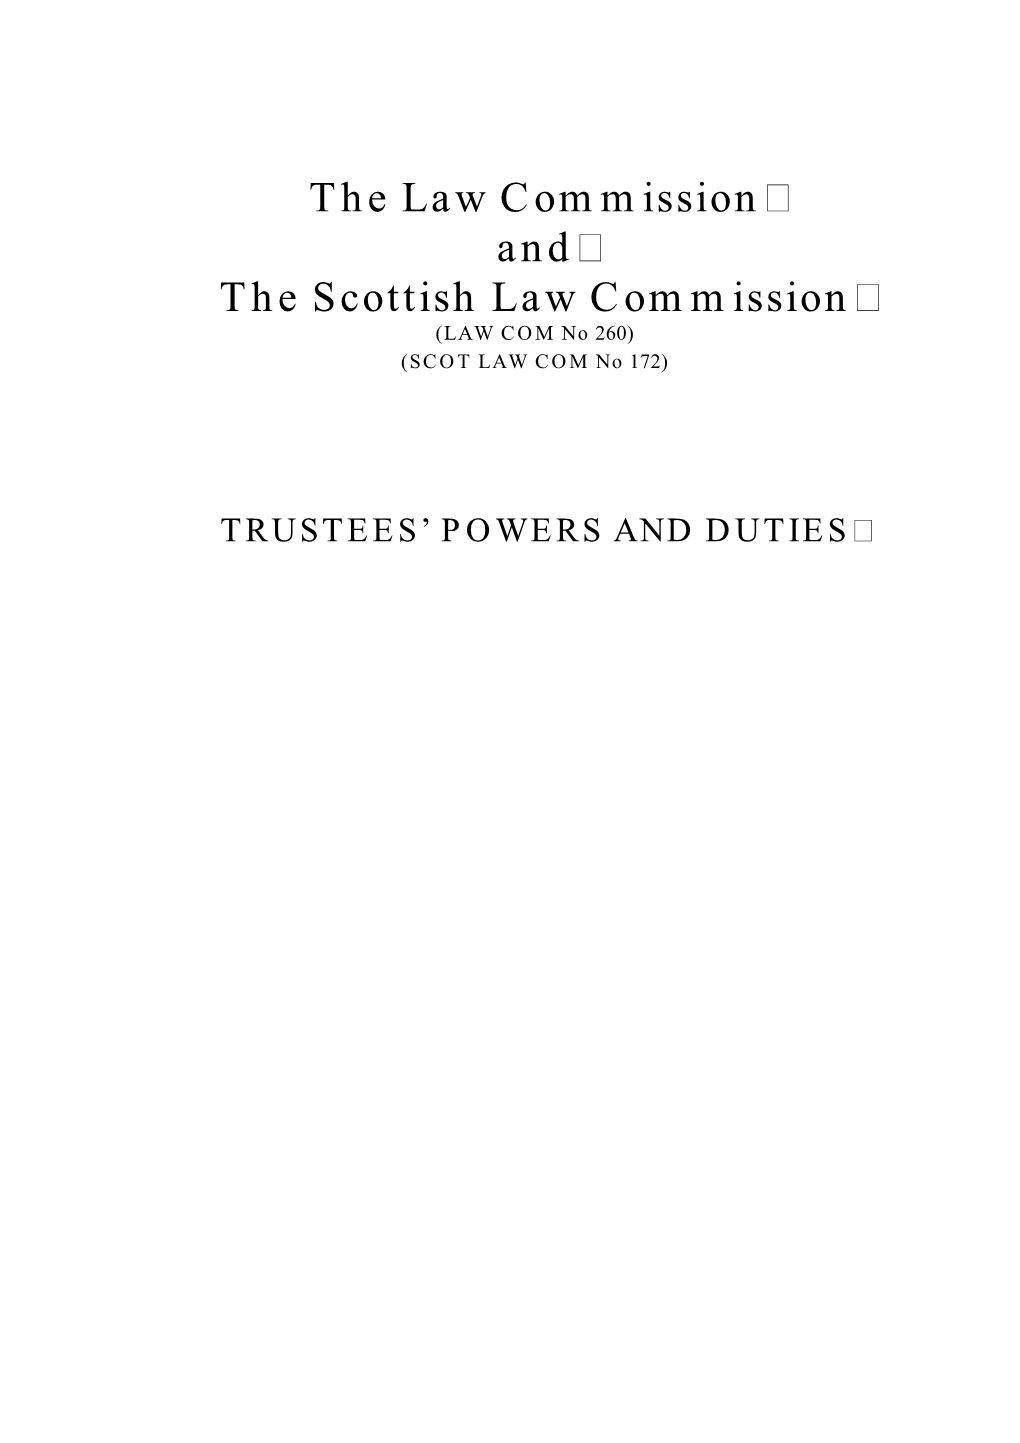 Trustees' Powers and Duties